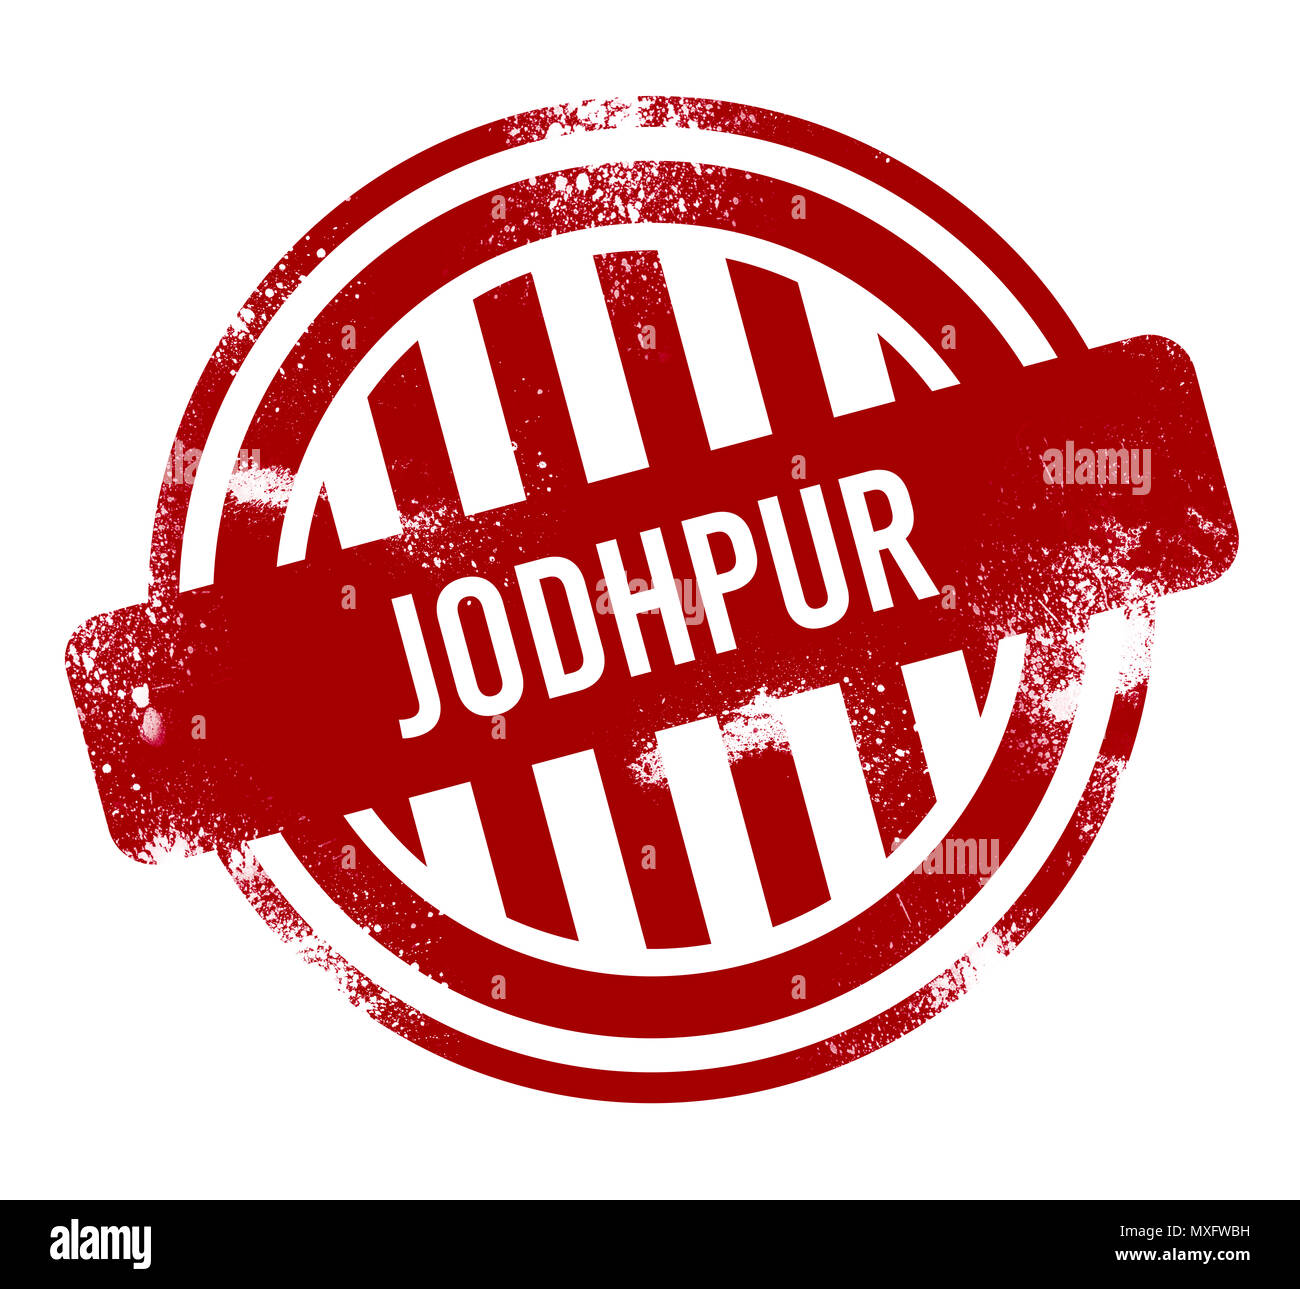 Jodhpur - Rot grunge-Taste, Stempel Stockfoto